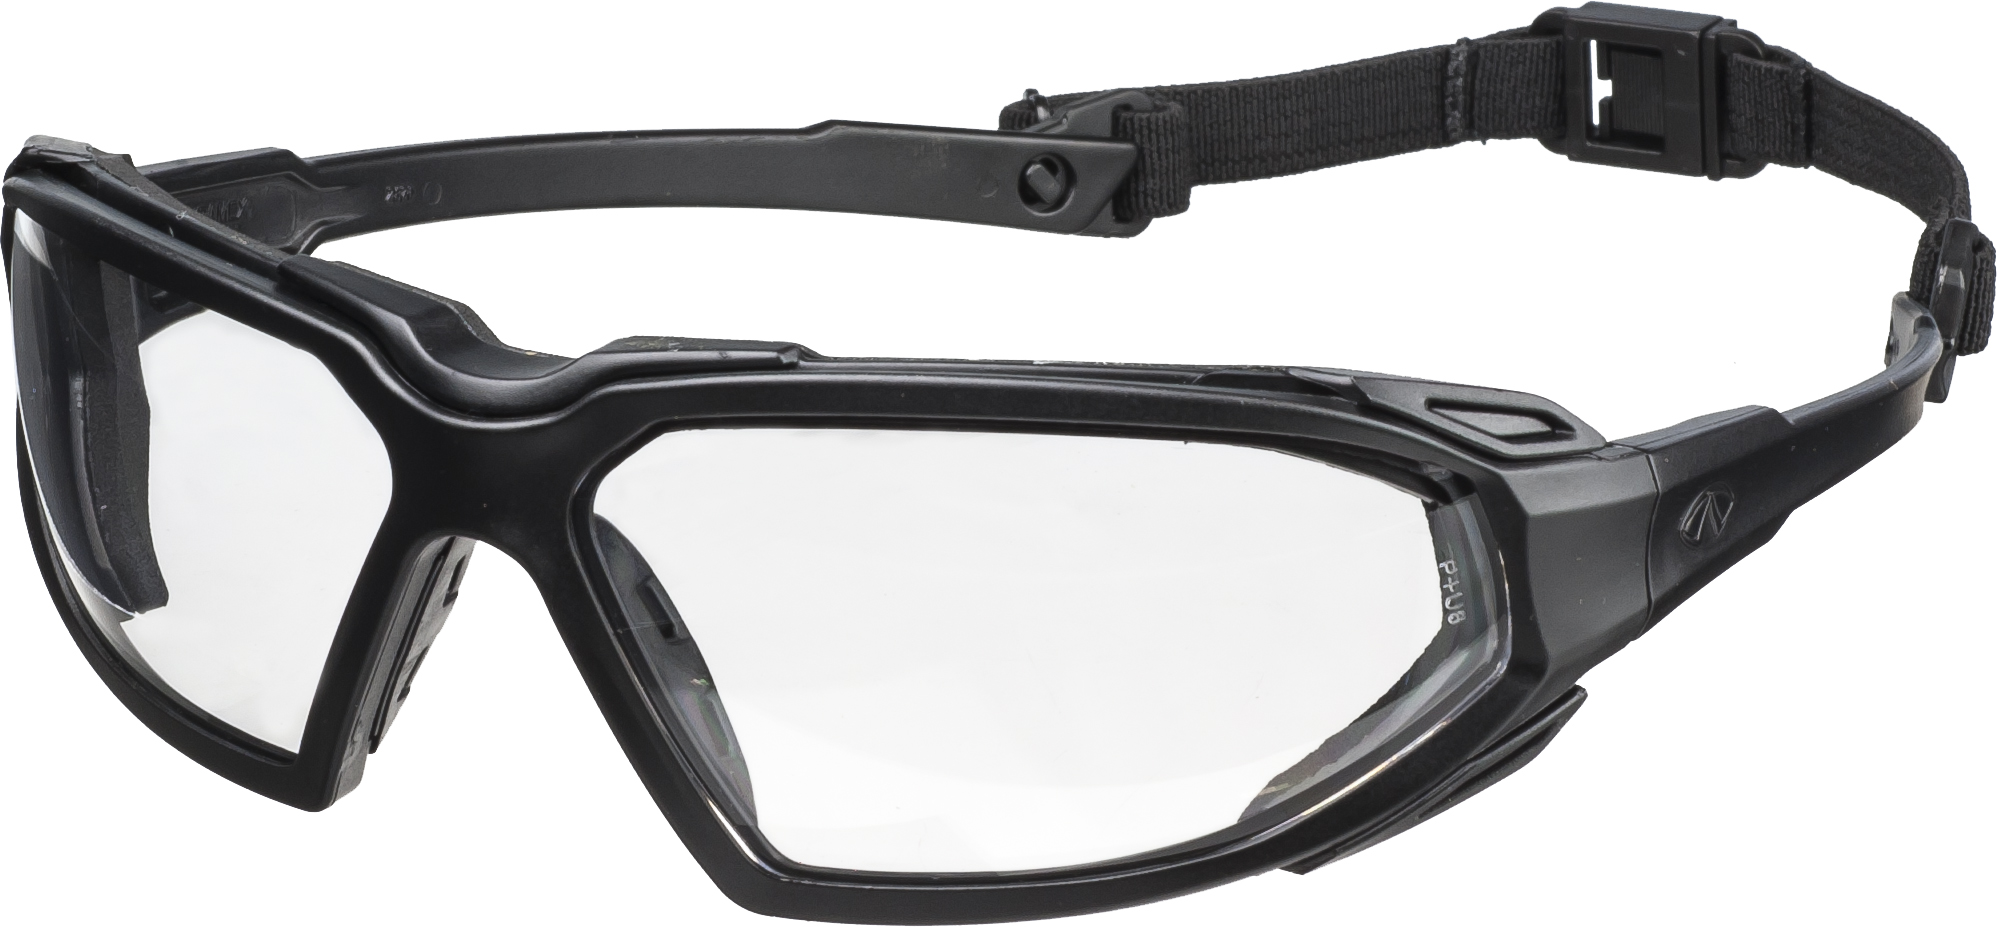 Pyramex Highlander Plus Safety Glasses with Clear Anti-Fog Lens Black Frame 